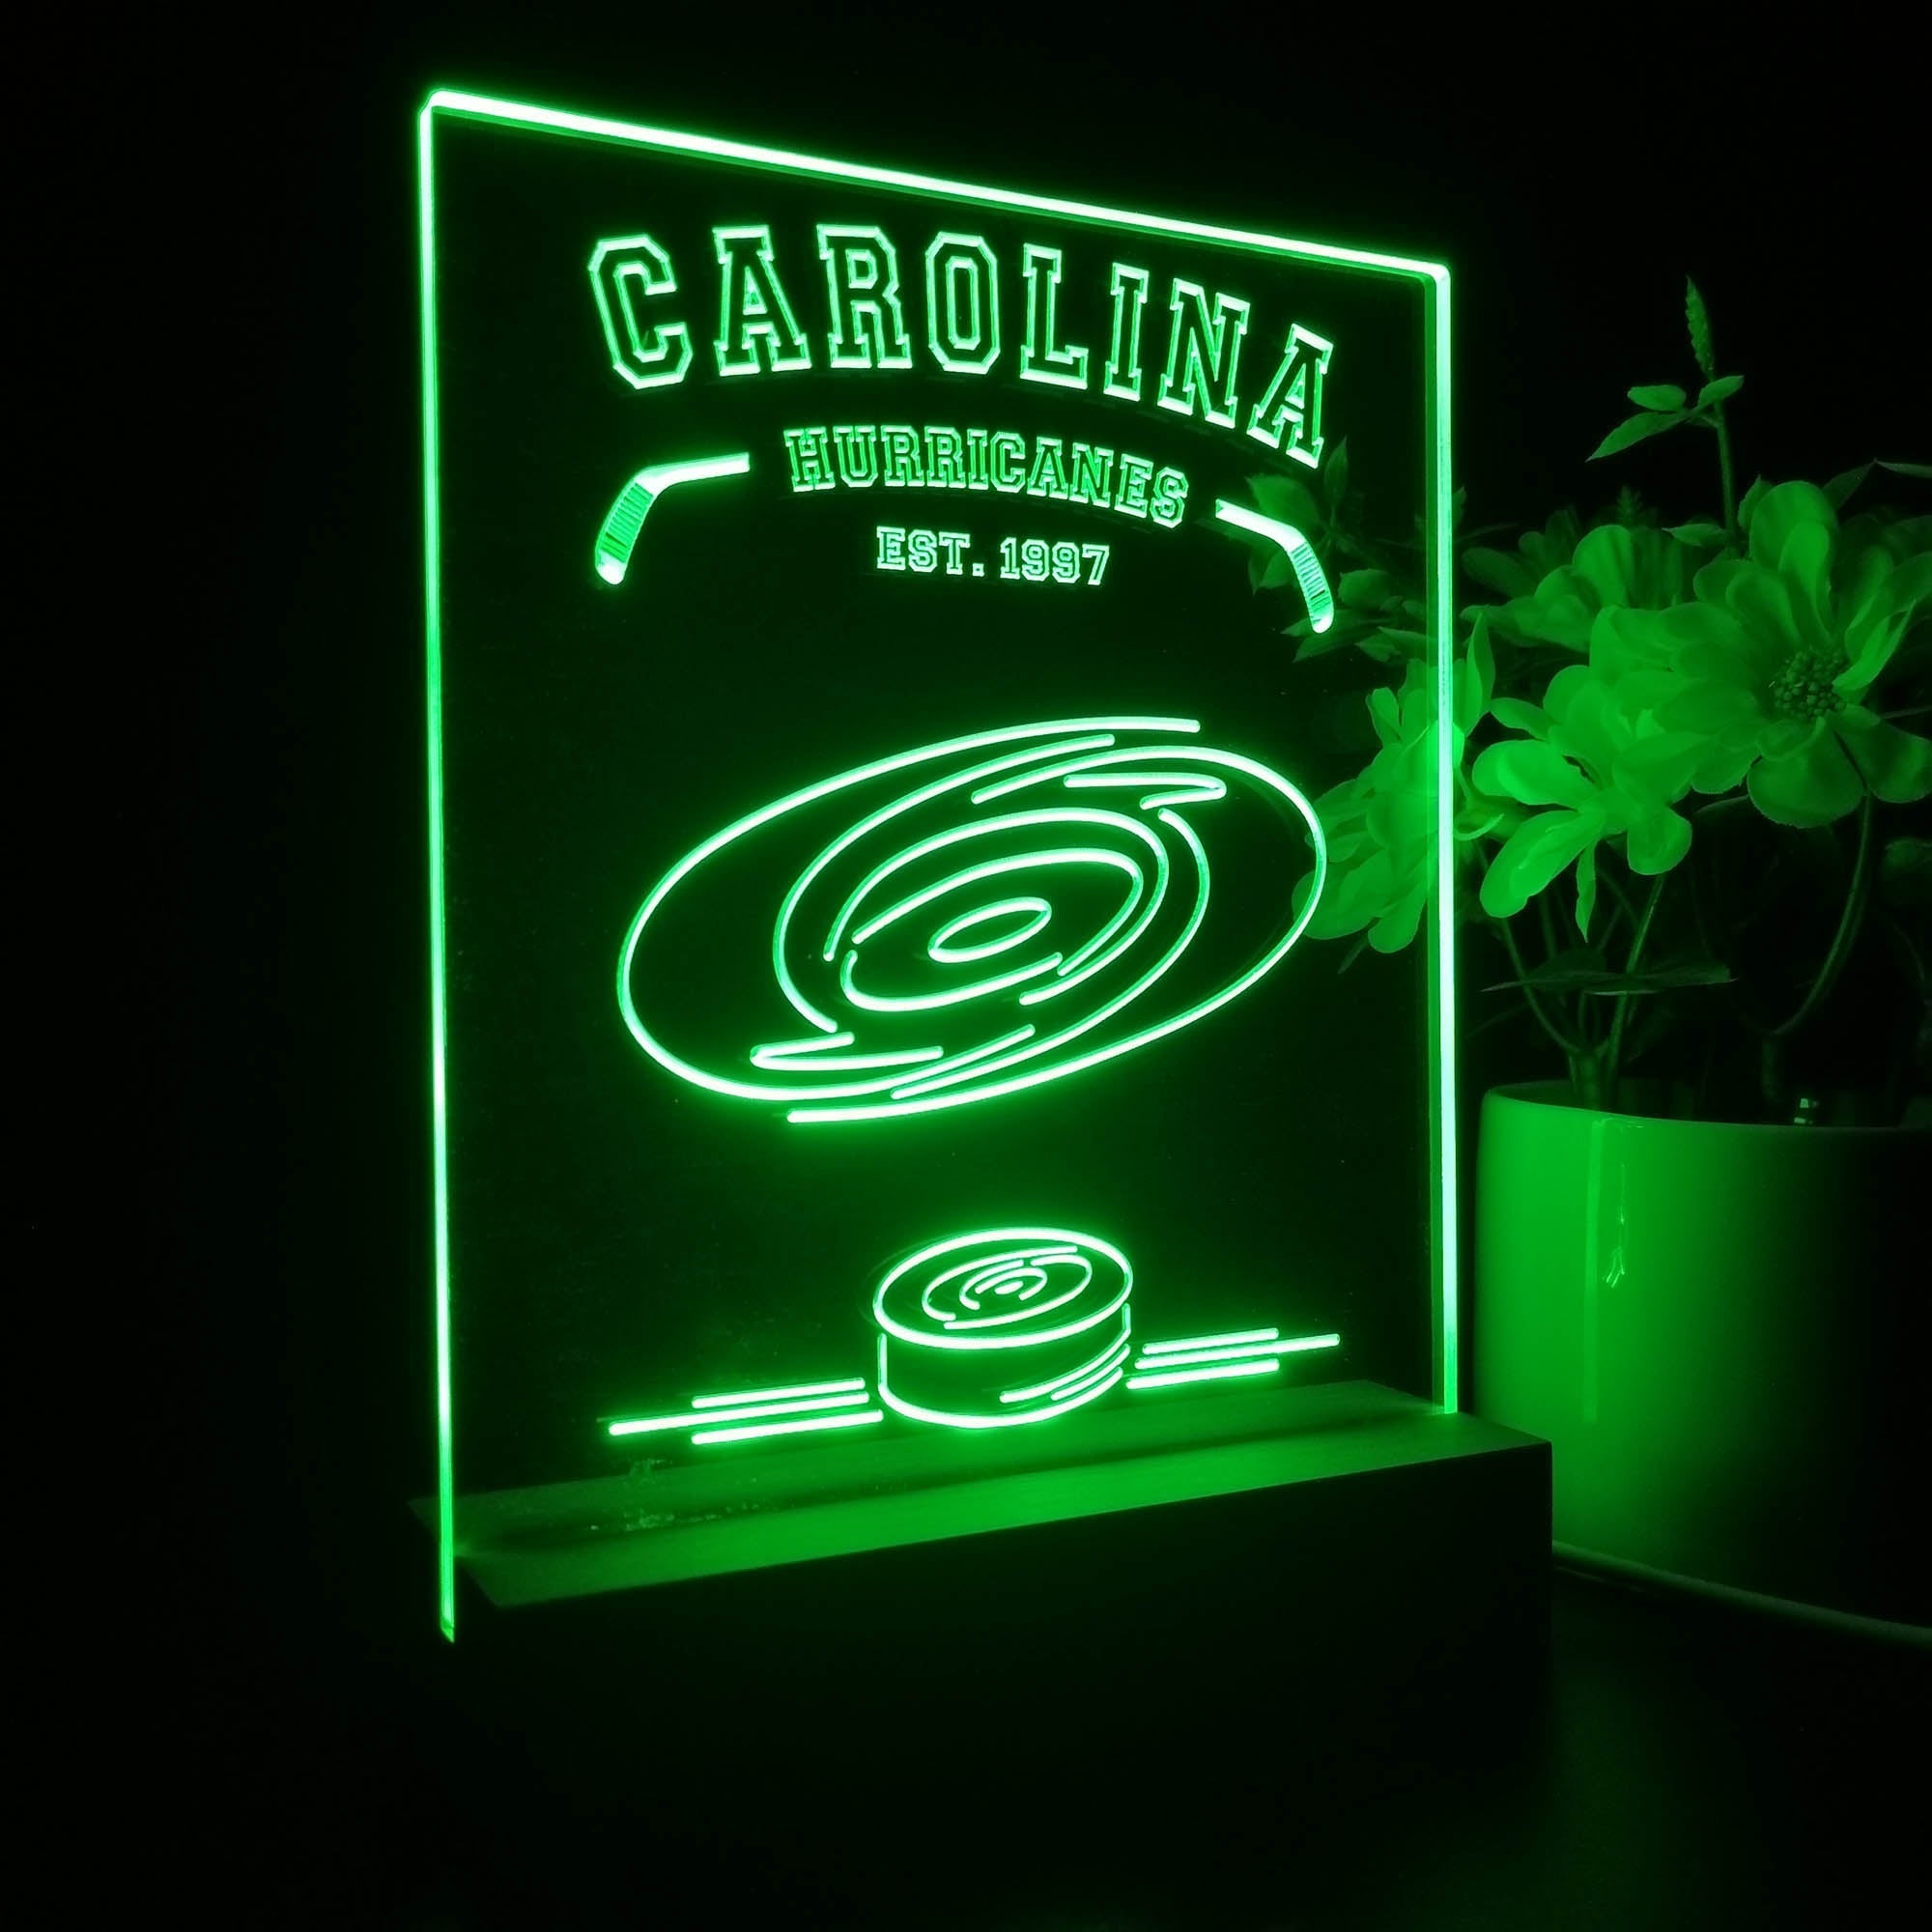 Personalized Carolina Hurricanes Souvenir Neon LED Night Light Sign